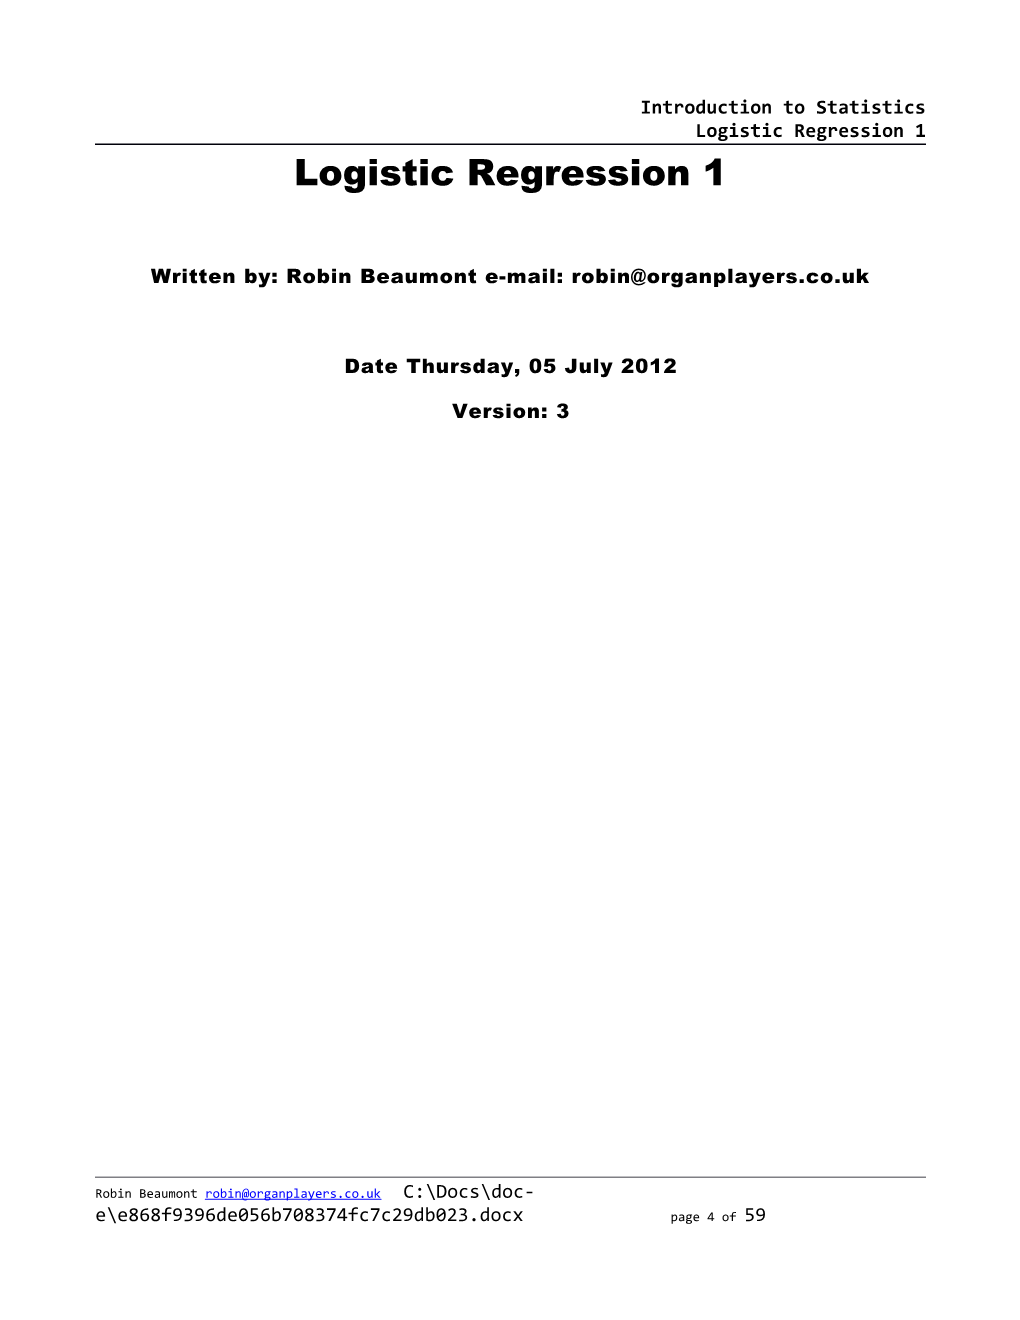 Introduction to Statistics Logistic Regression 1